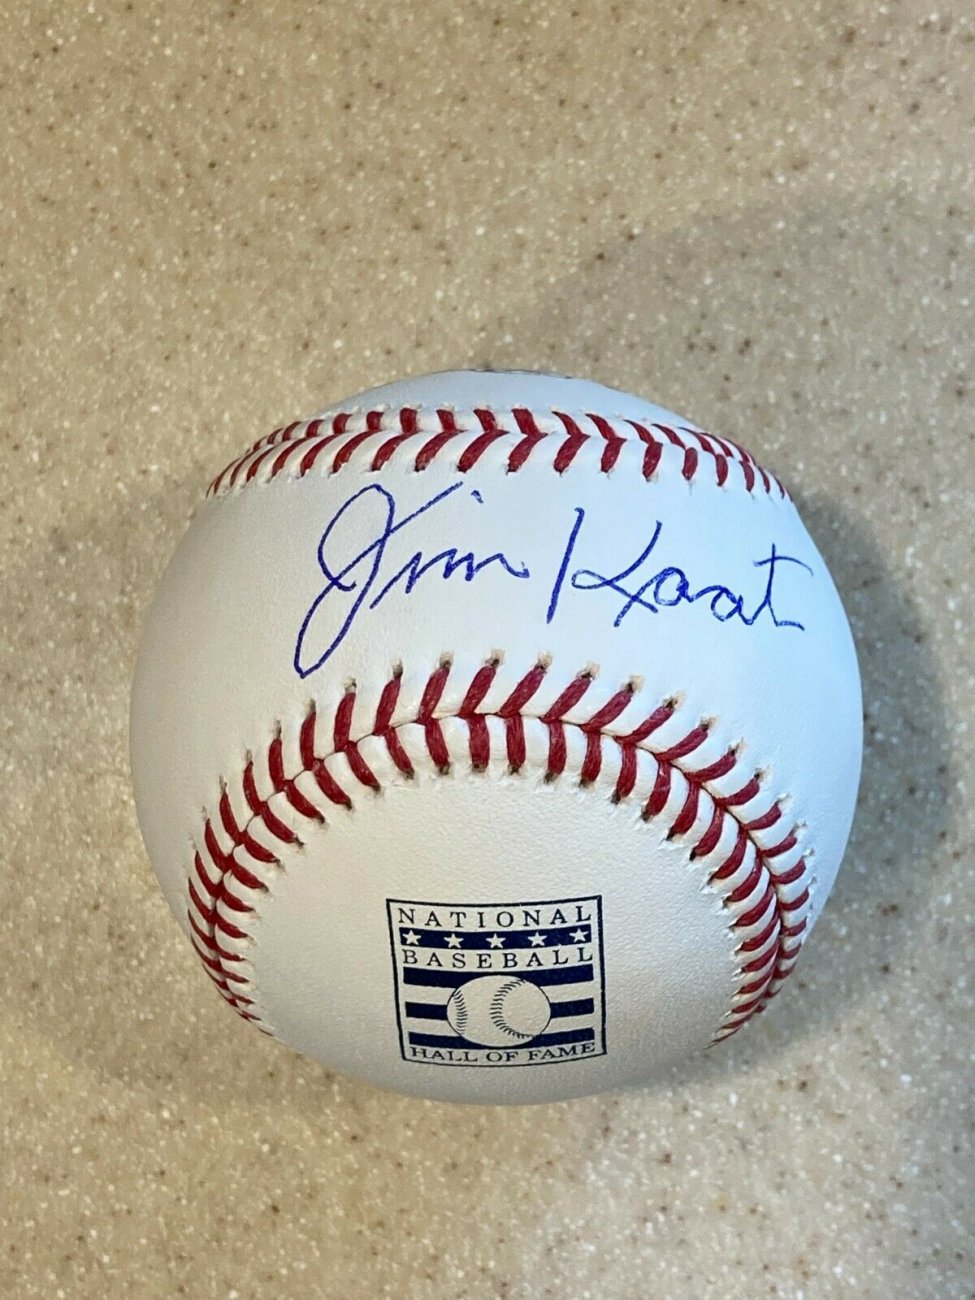 Jim Kaat Autographed HOF Baseball Sweetspot.jpg